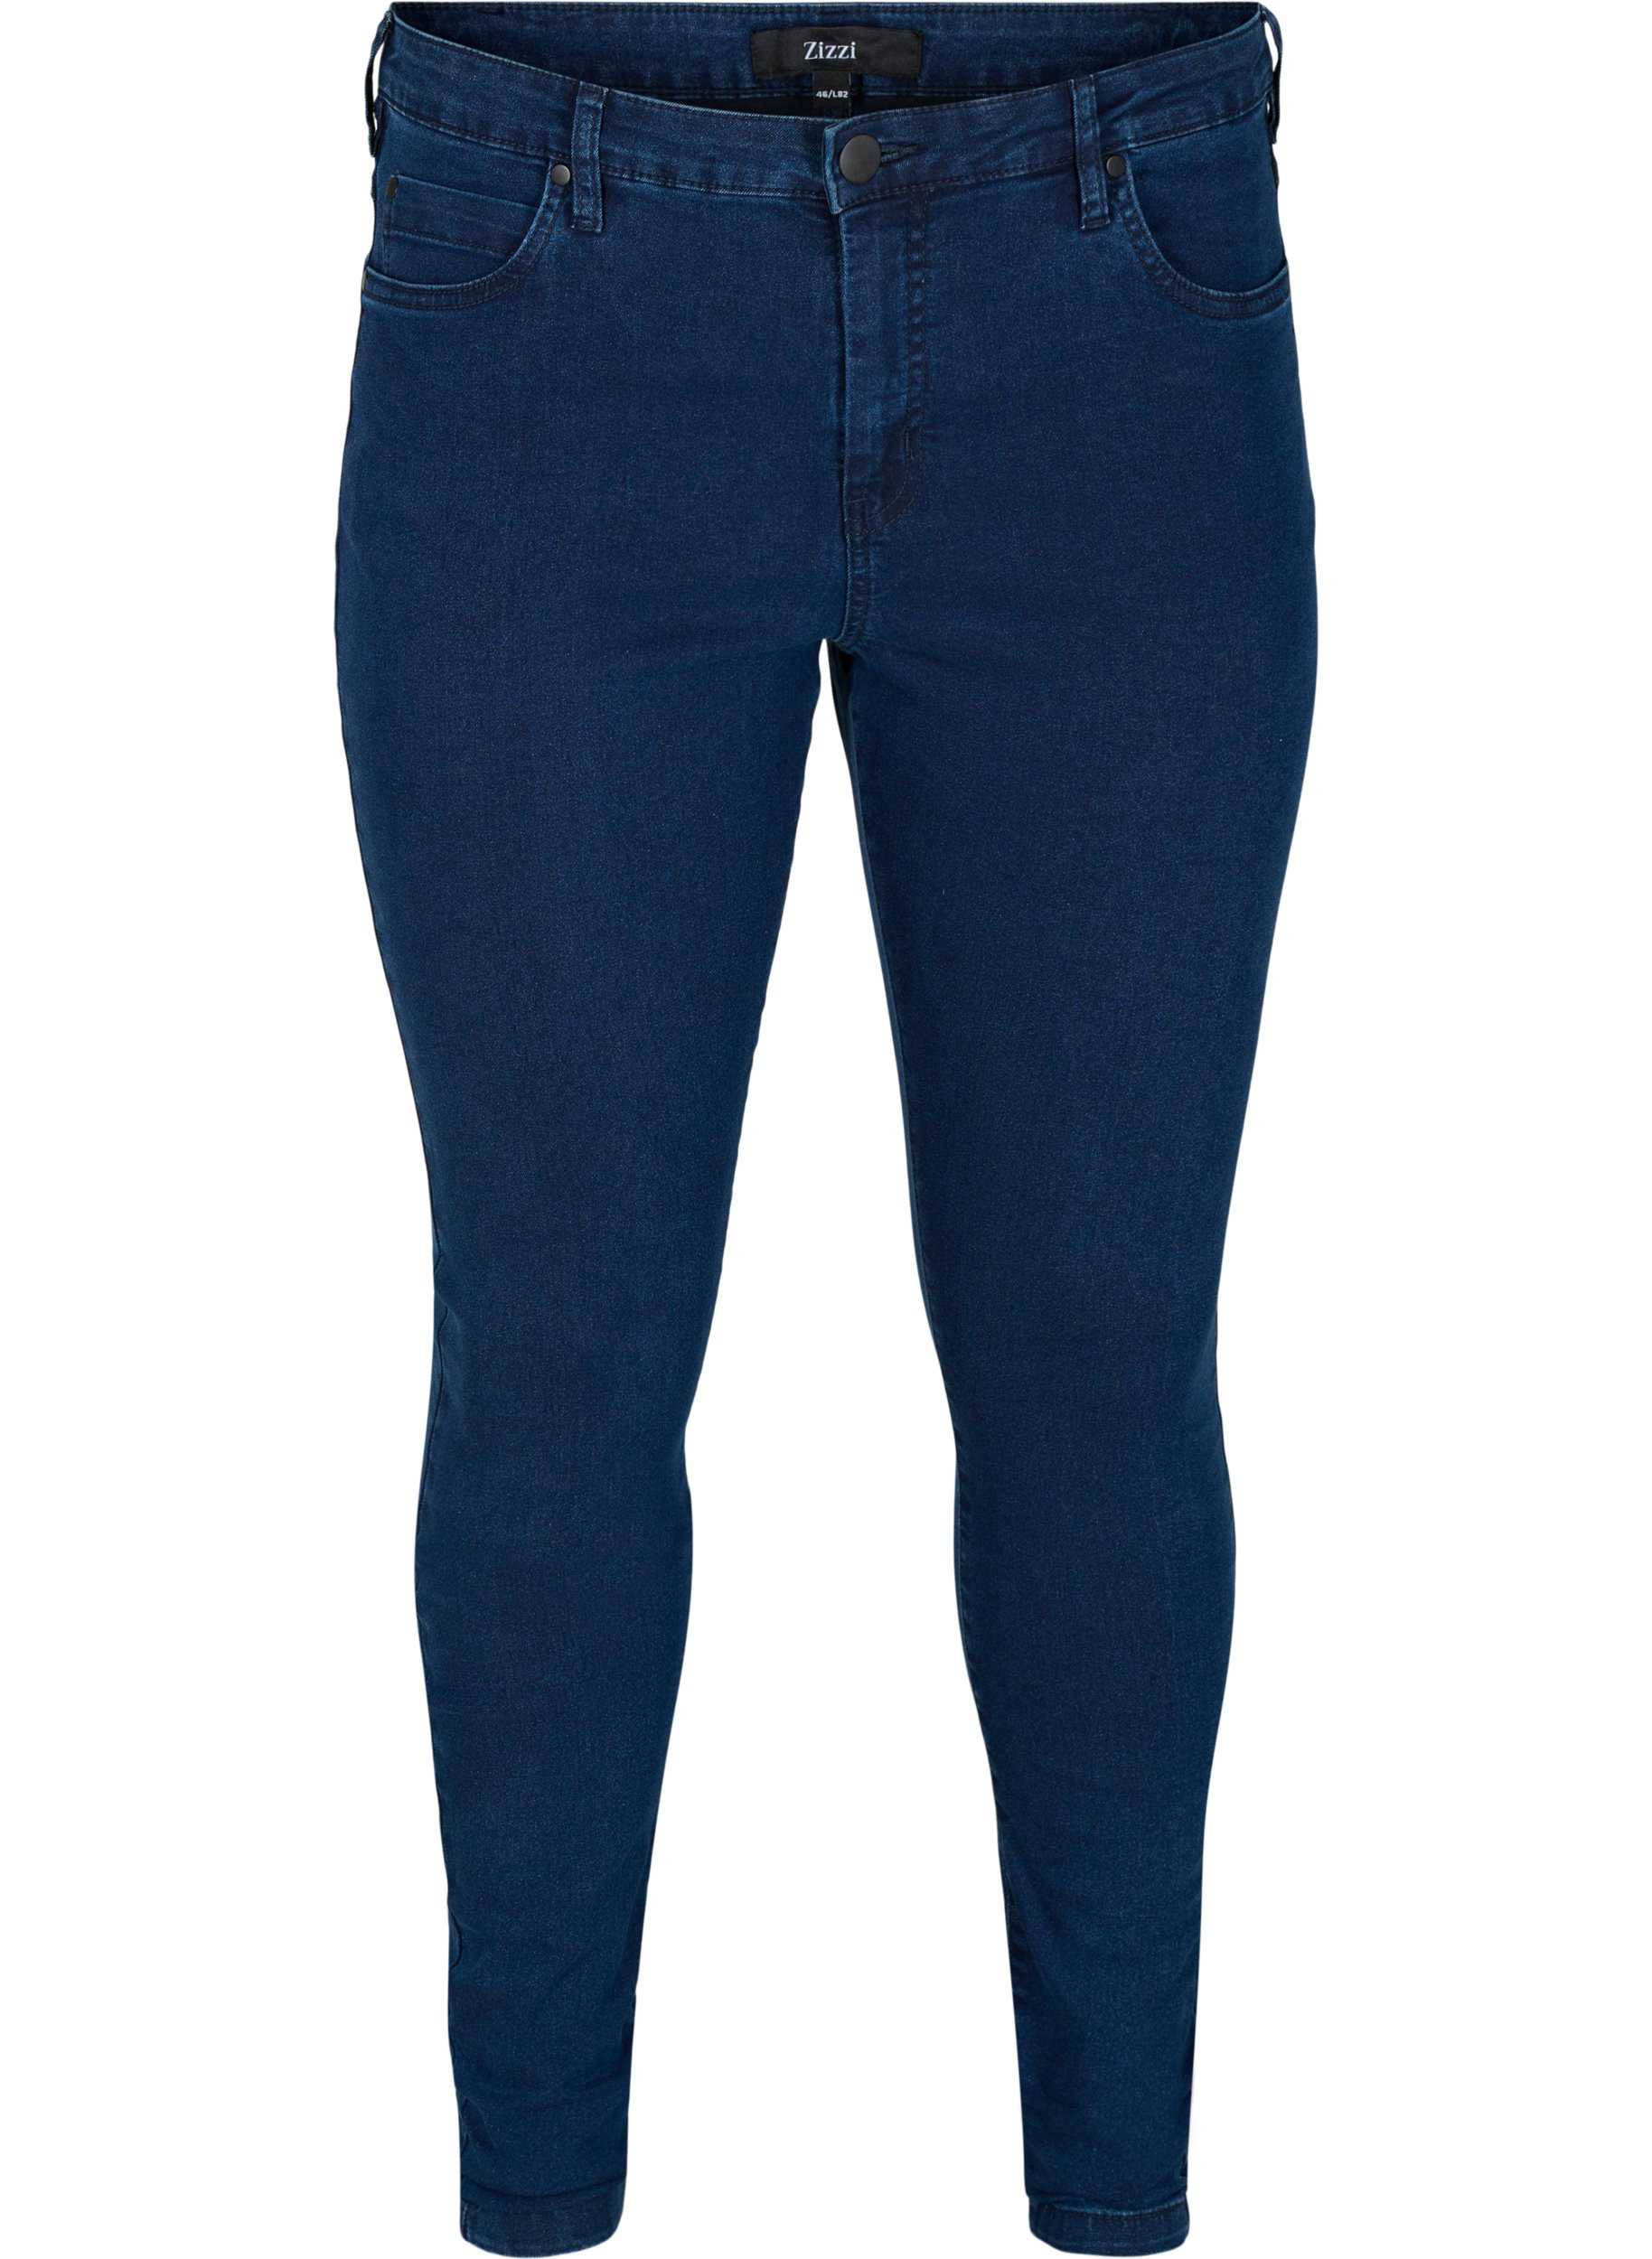 Super slim Amy jeans med hög midja, Dark blue